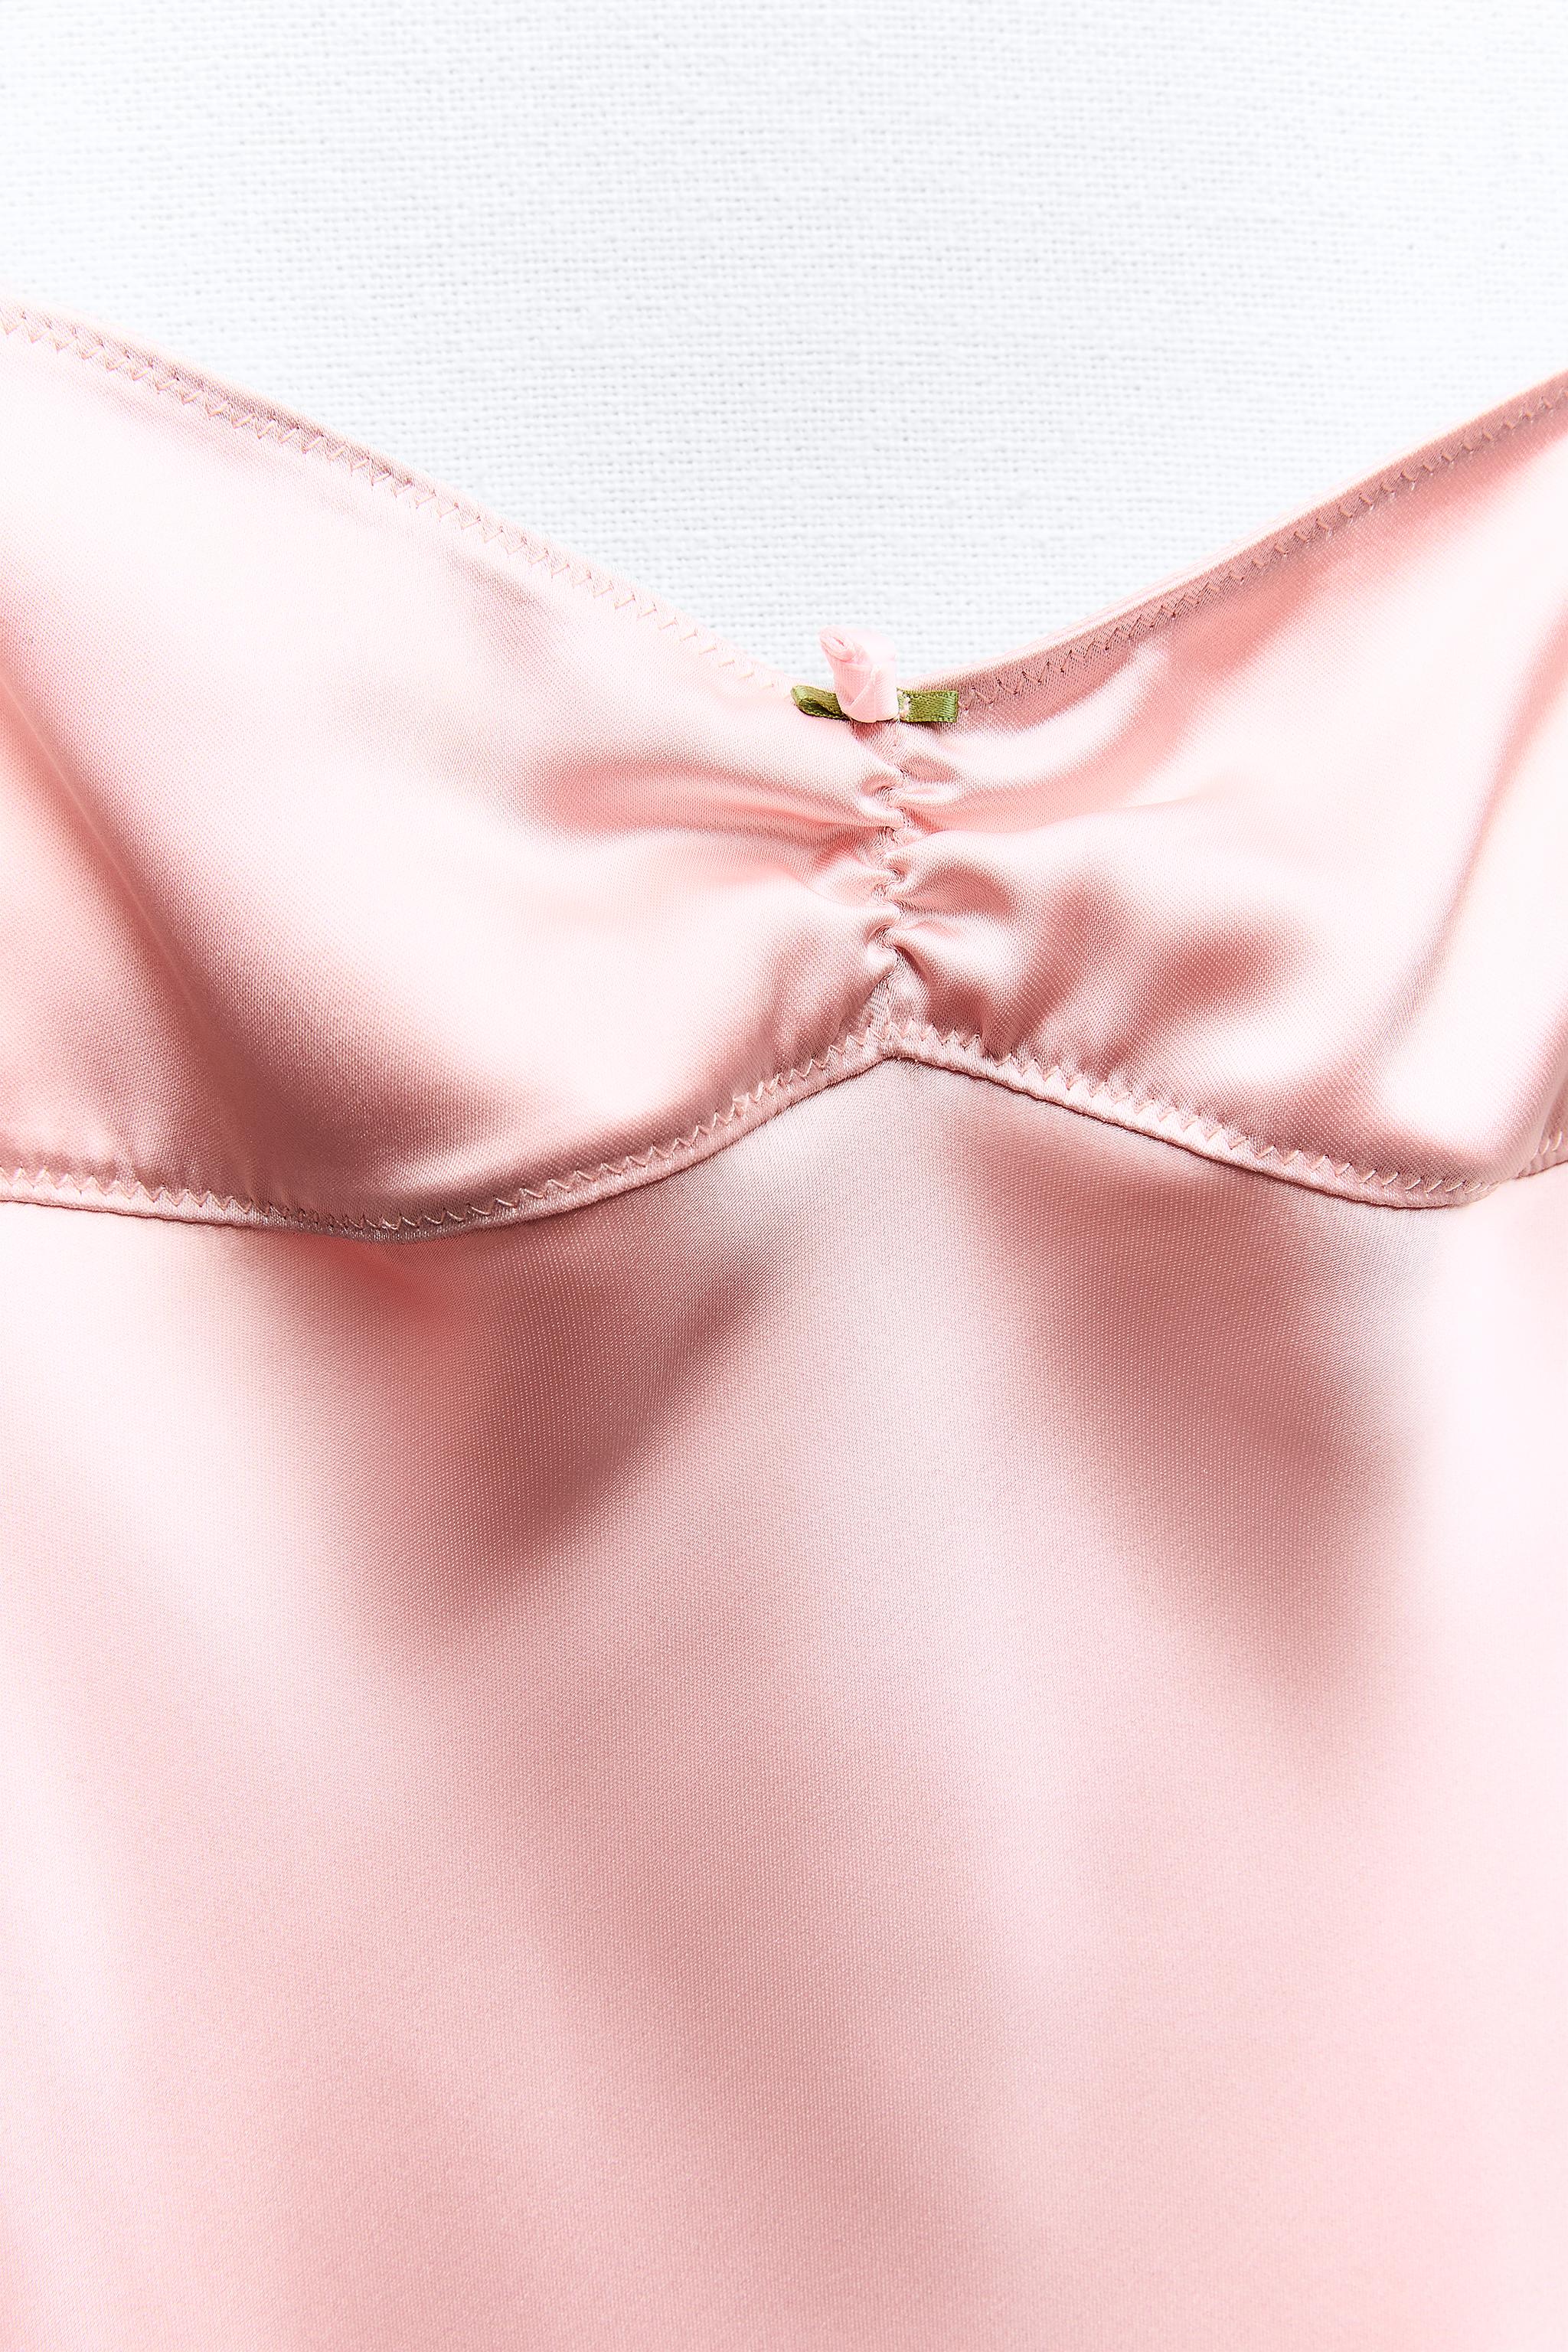 Bella and Bloom Boutique - Zara Satin Slip Mini Dress: Pink